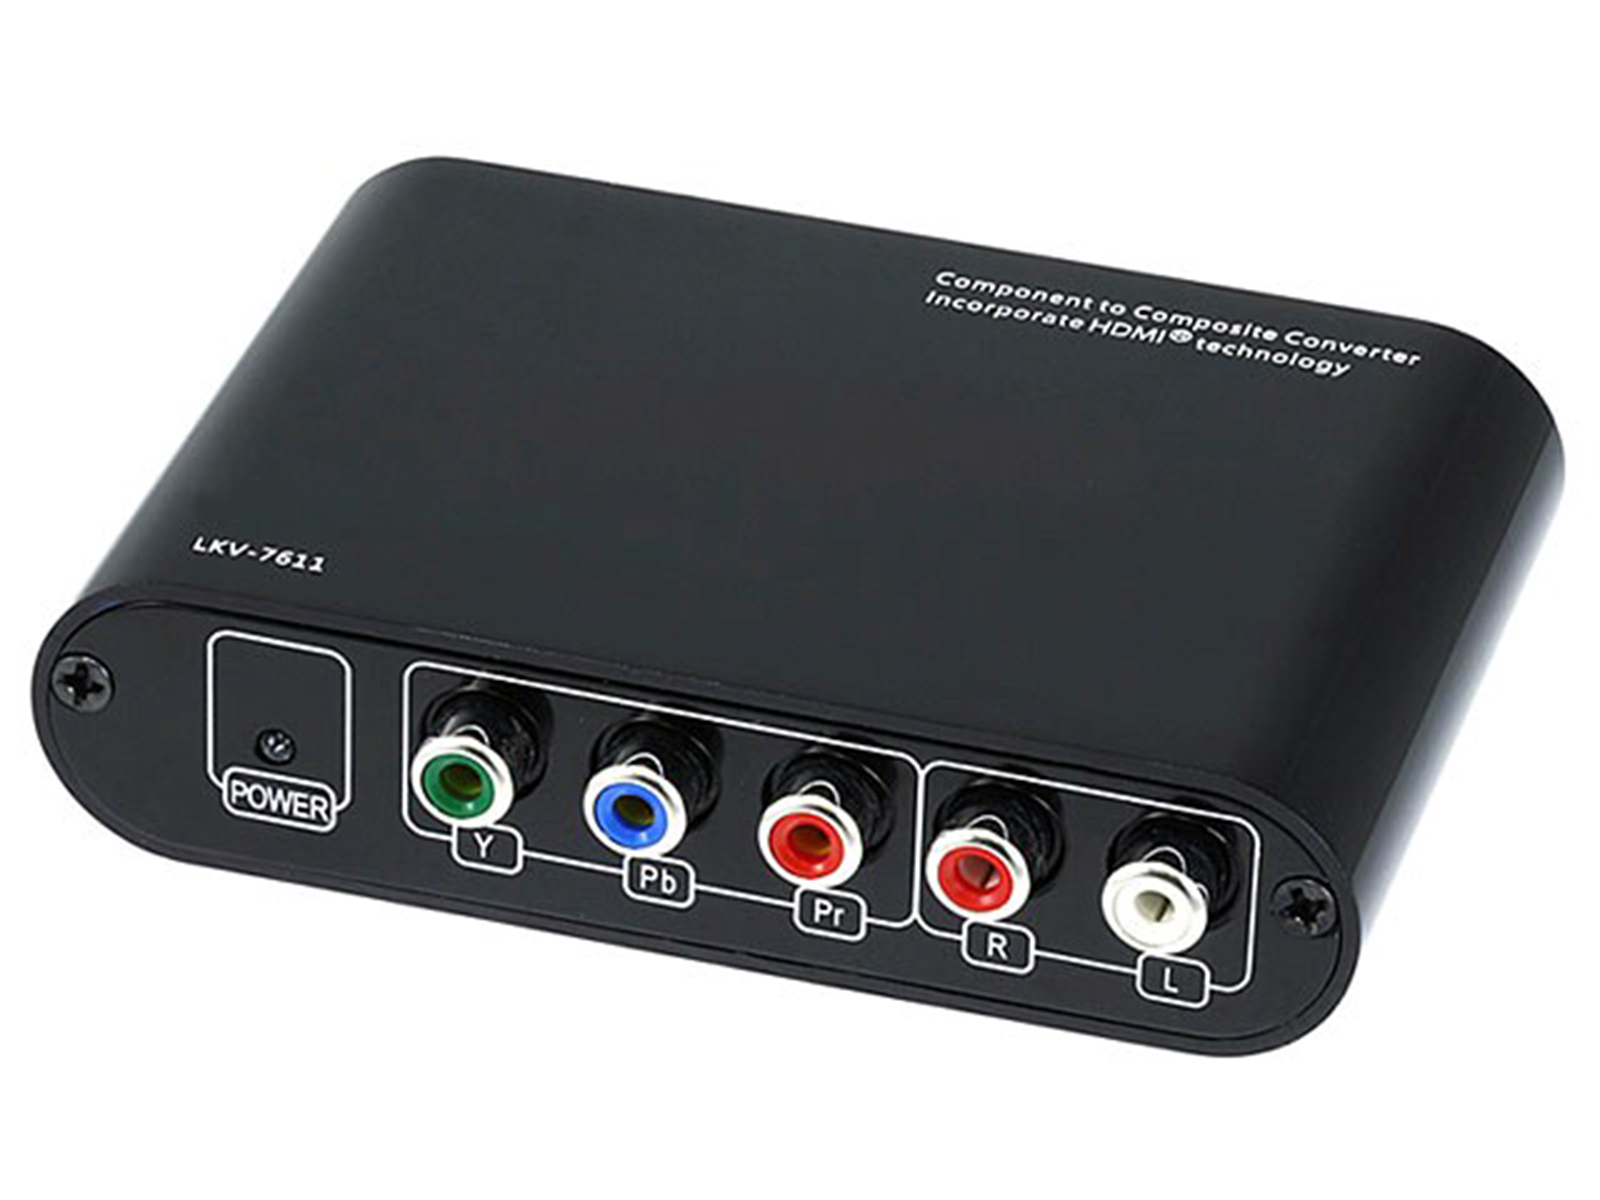 Monoprice MNP7114 7114 Component (YpbPr) to Composite Video Converter - Black